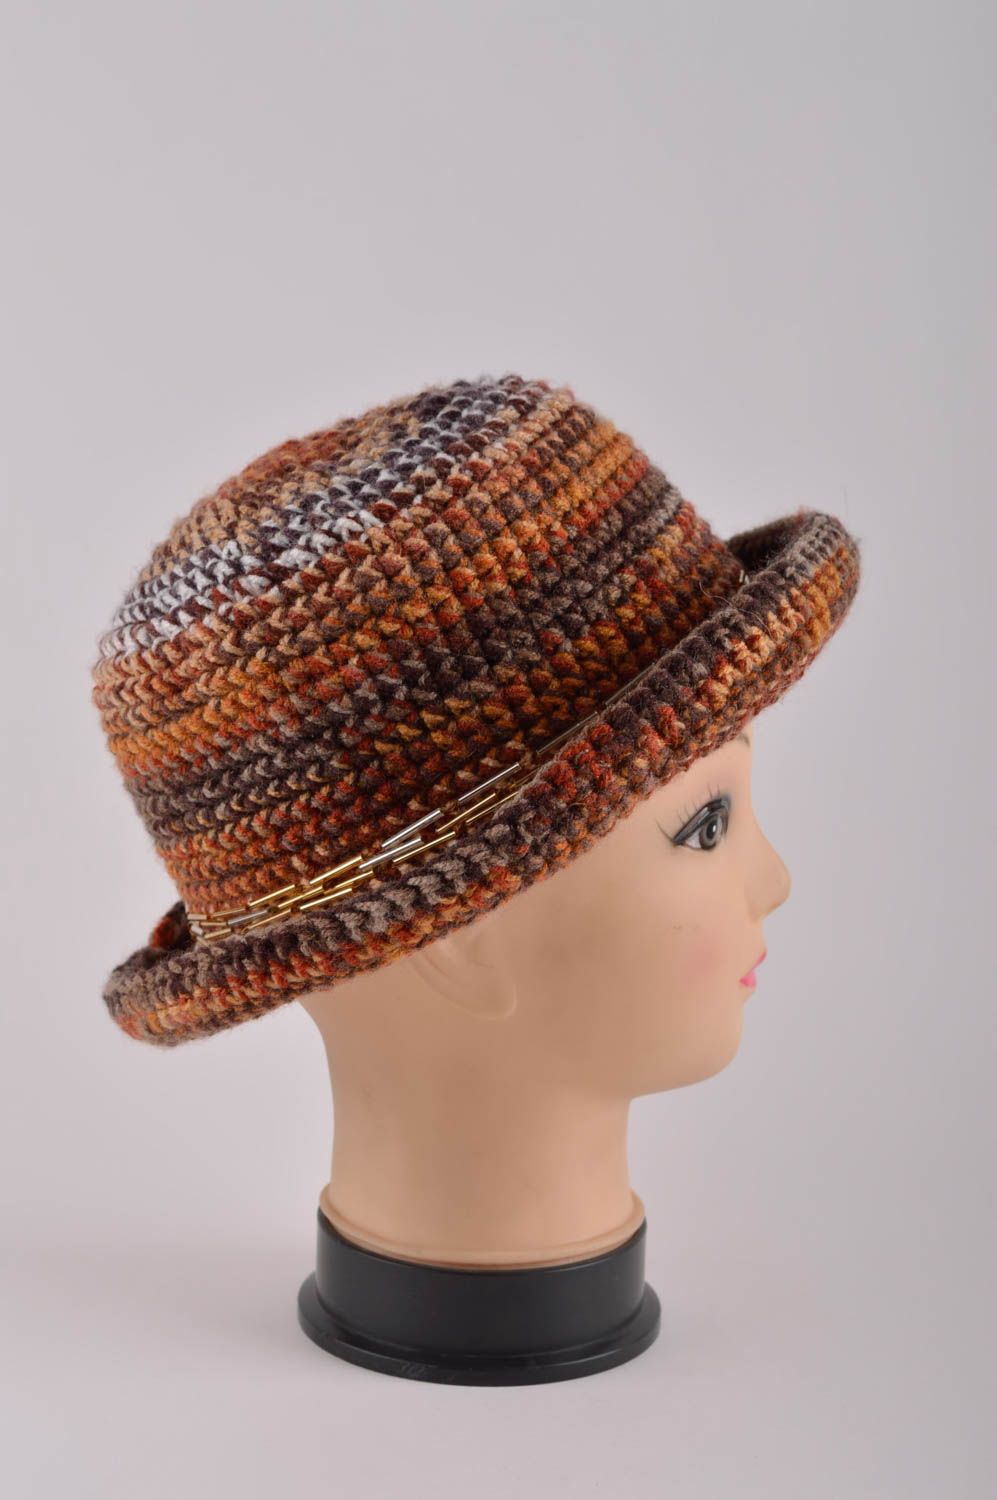 Handmade ladies hat crochet hat designer accessories fashion hats gifts for her photo 4